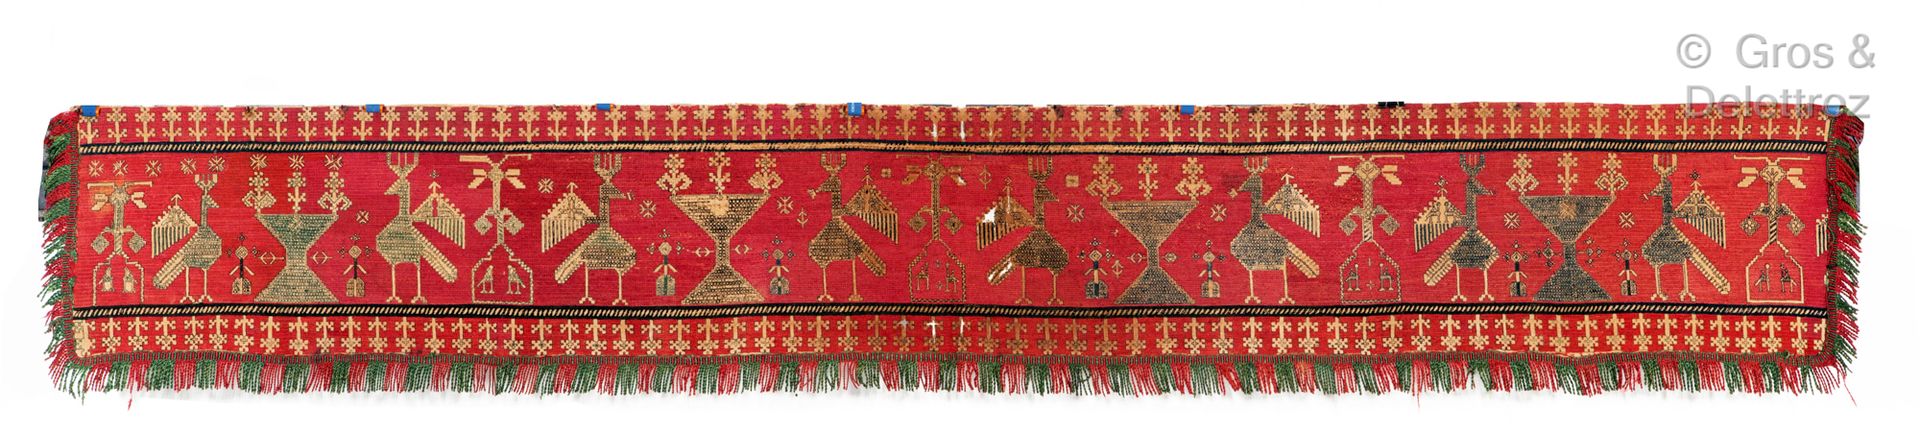 Null 难得一见的大型丝质阿泽穆尔刺绣，摩洛哥

一件罕见的17或18世纪大型丝质阿兹莫尔刺绣作品

这个例子似乎是最完整的，也是已知的最古老的Azemmou&hellip;